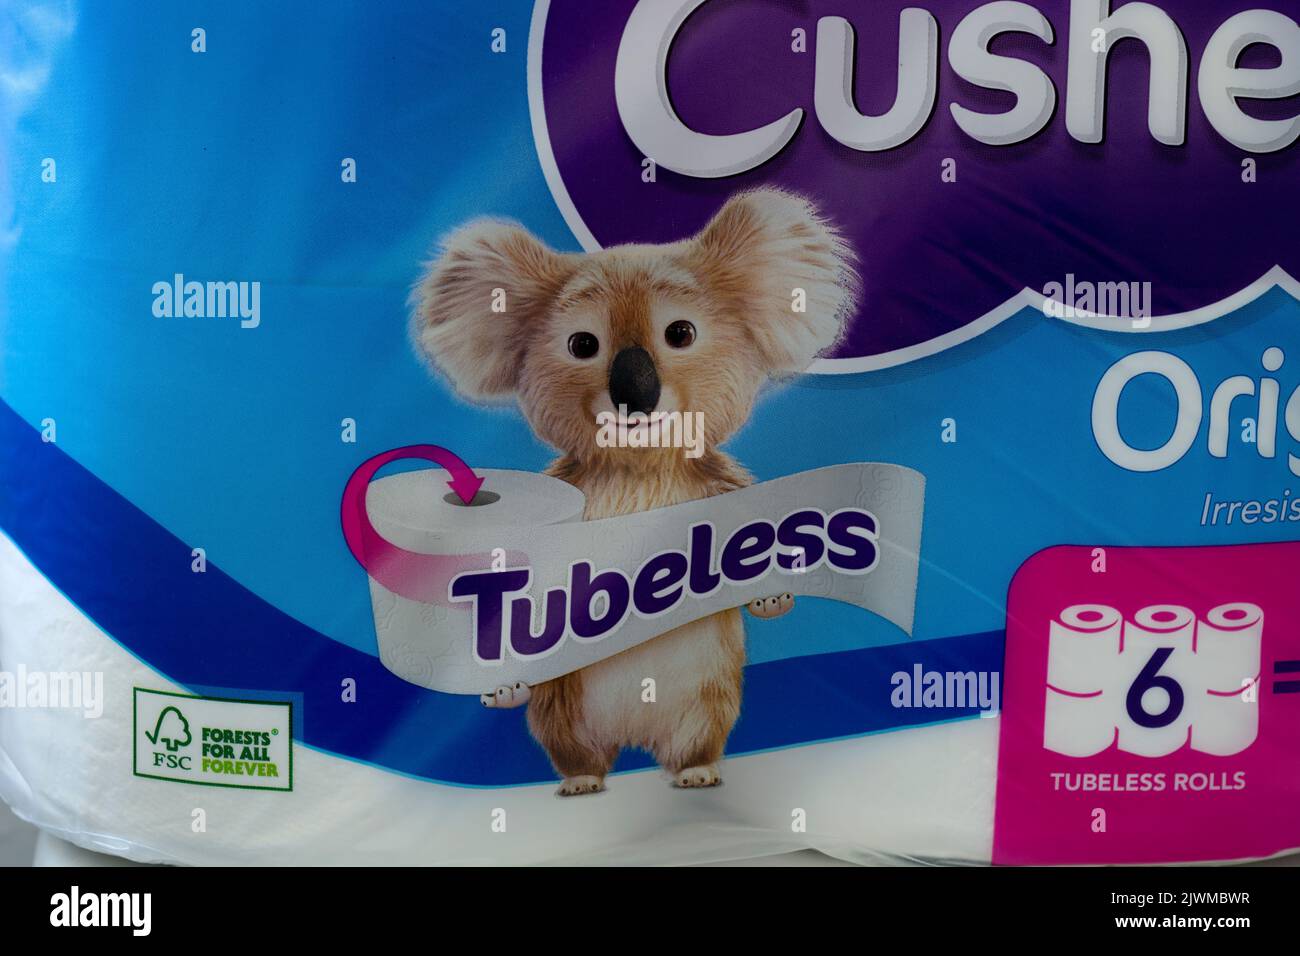 A pack of Cushelle tubeless toilet rolls Stock Photo